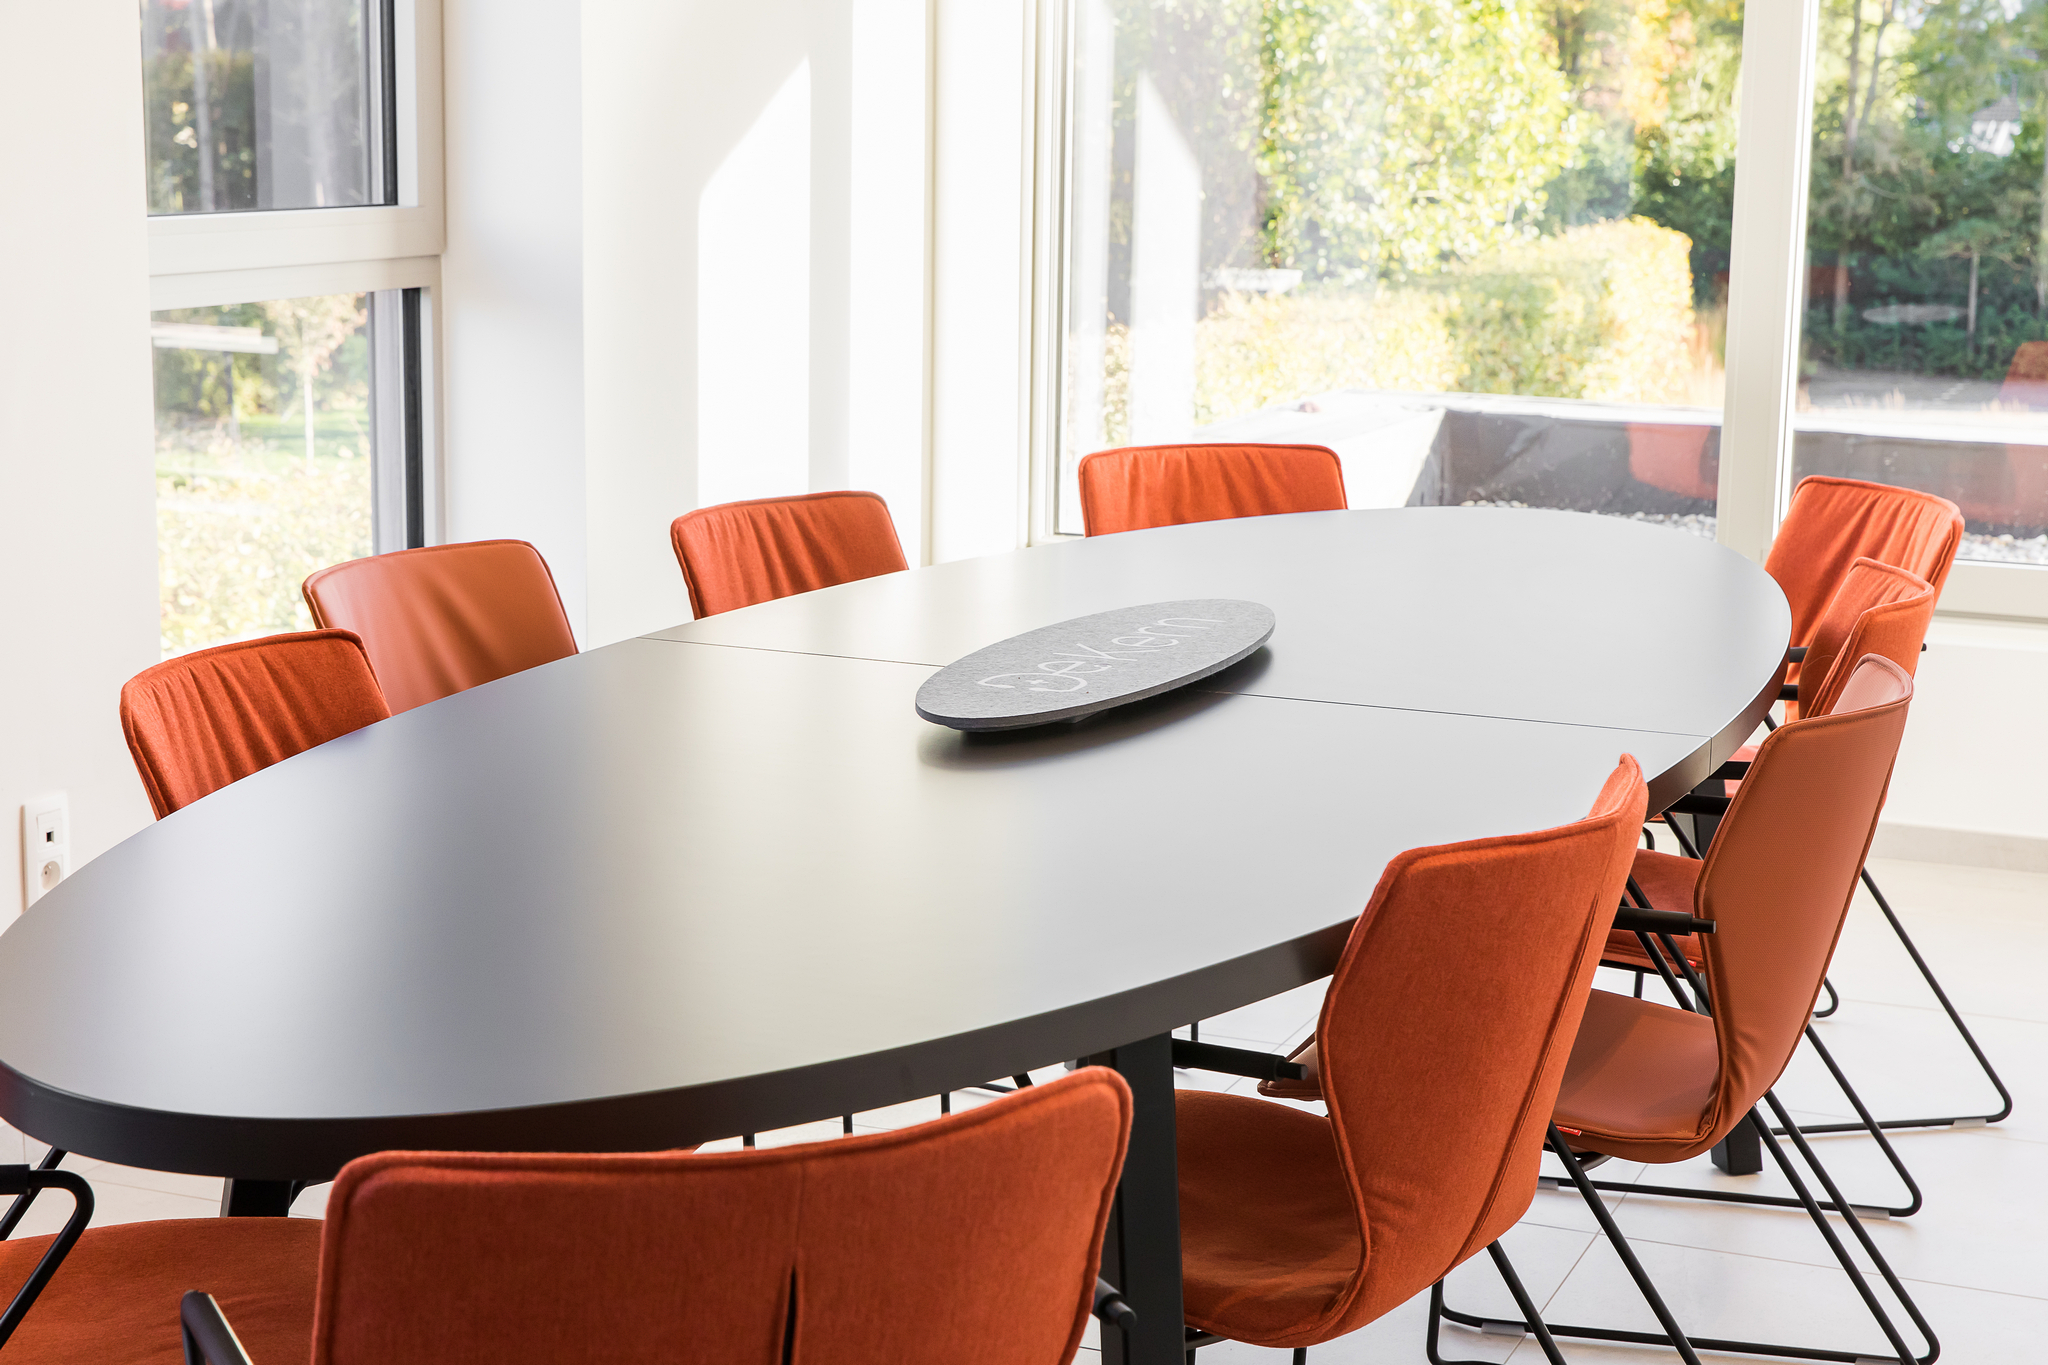 Ovale tafel, ideale vergadertafel